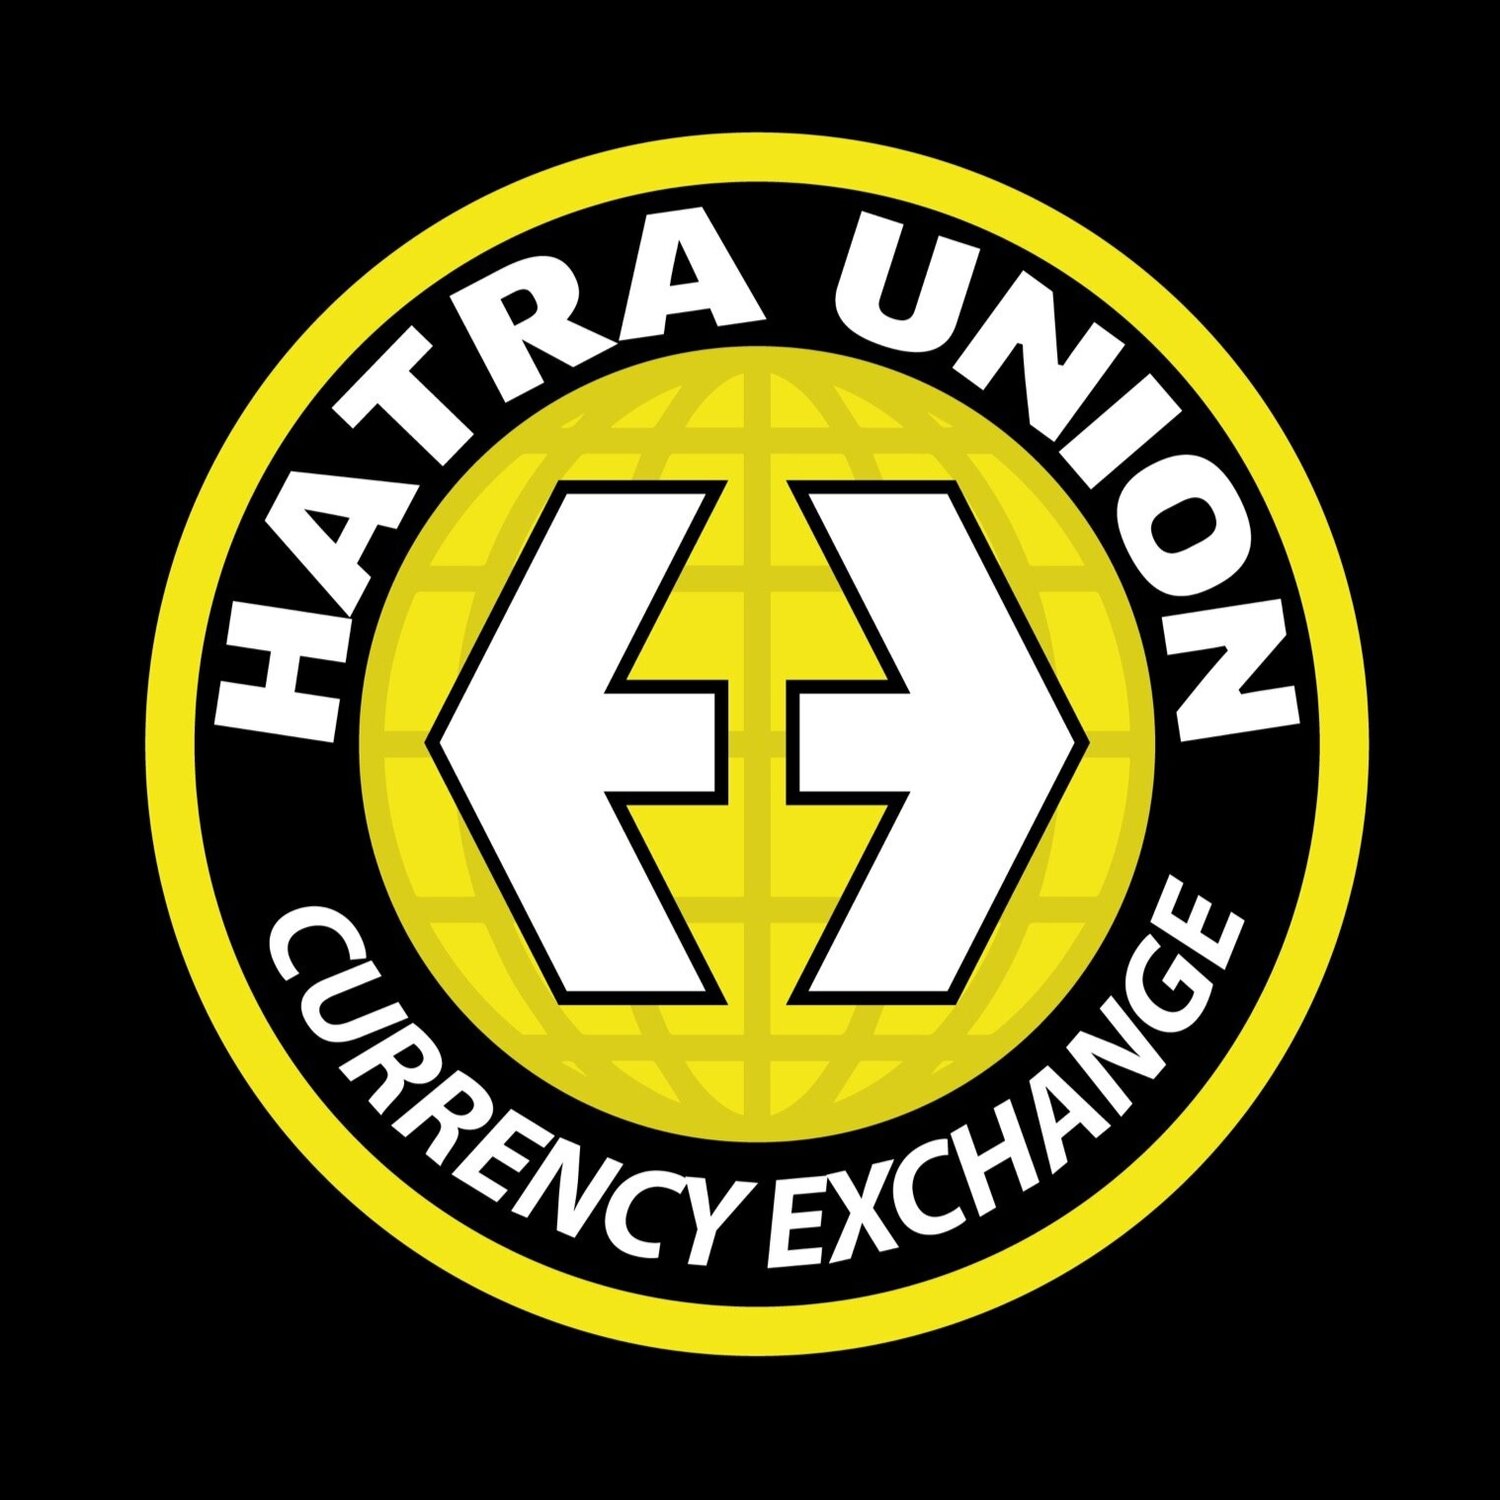 Hatra Union Currency Exchange